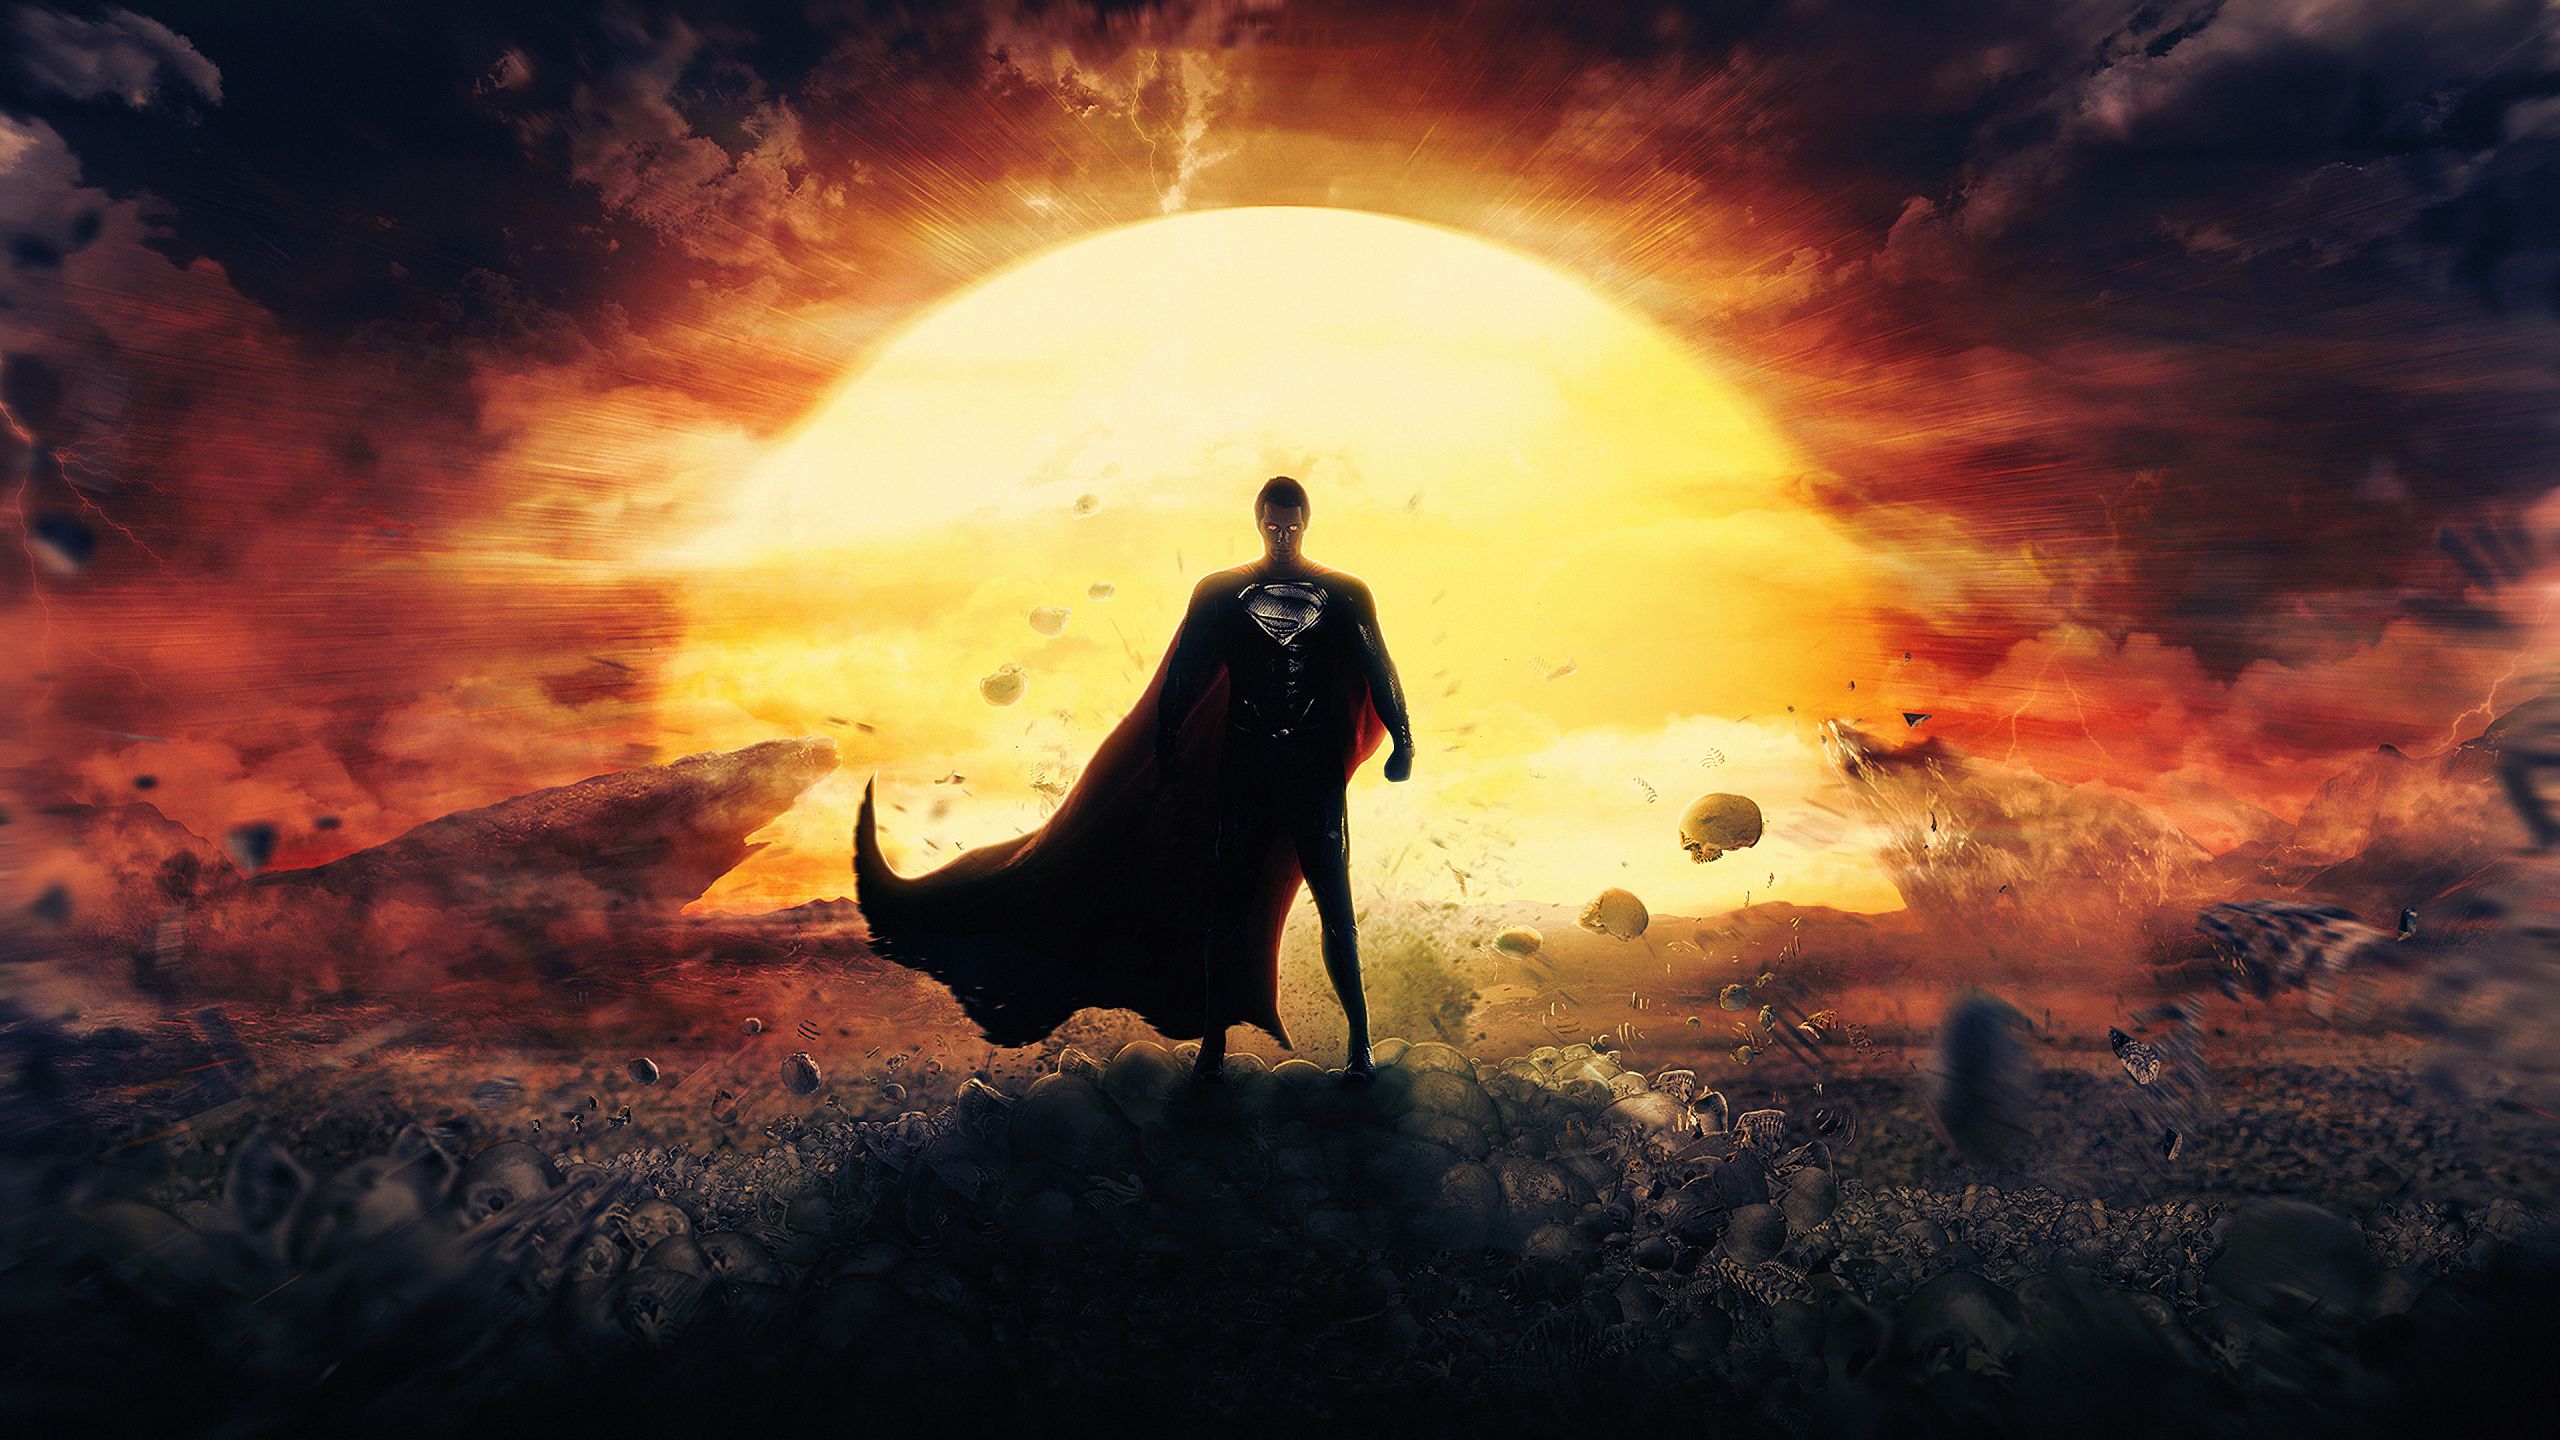 4K Man Of Steel Superman 1440P Resolution Wallpaper, HD Superheroes 4K Wallpaper, Image, Photo and Background